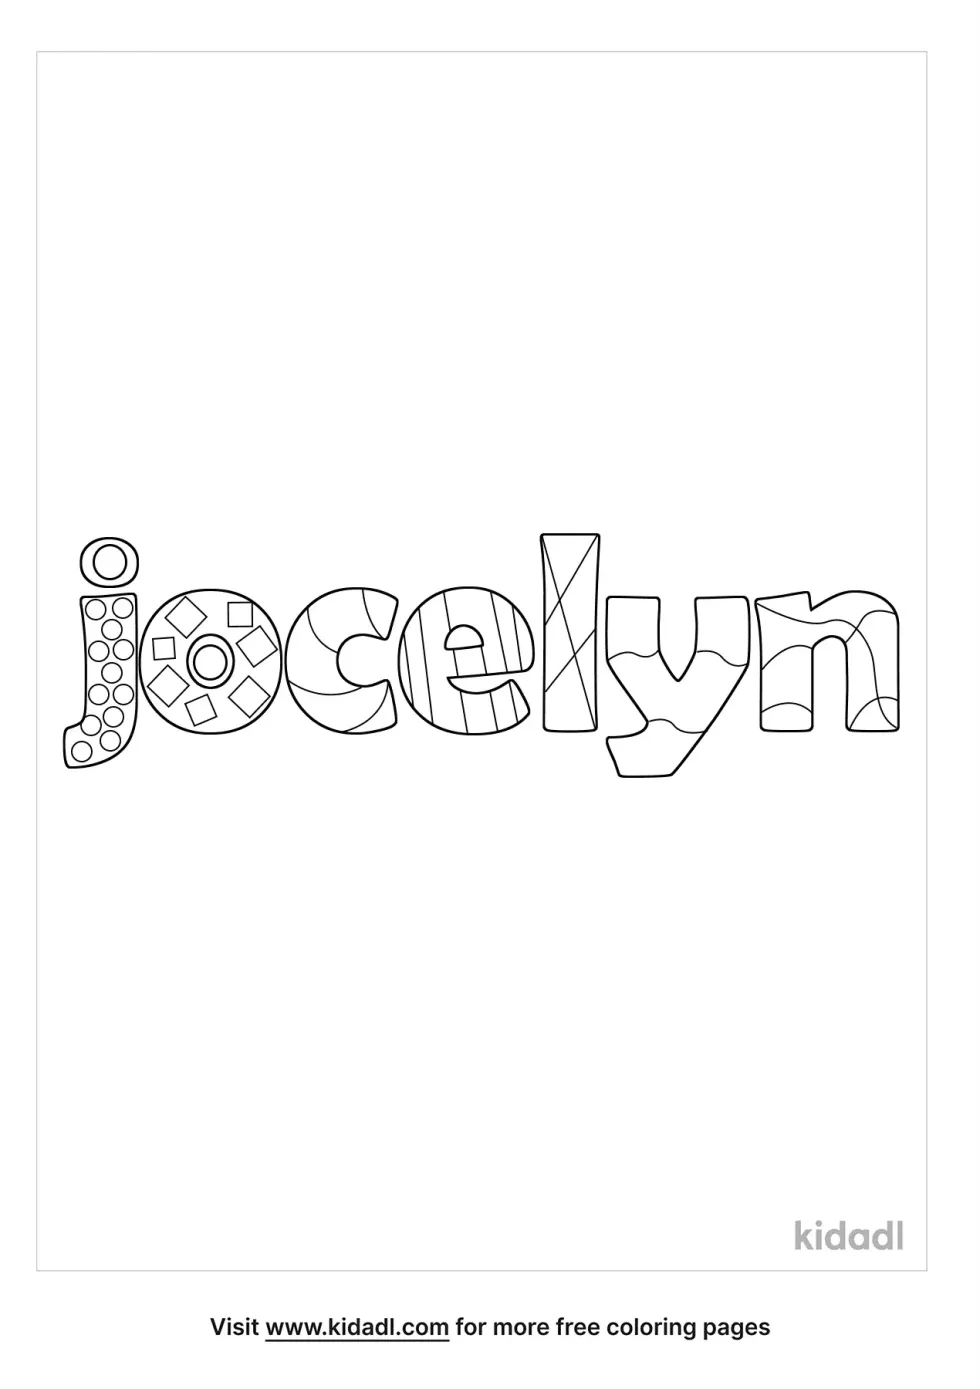 Jocelyn Name